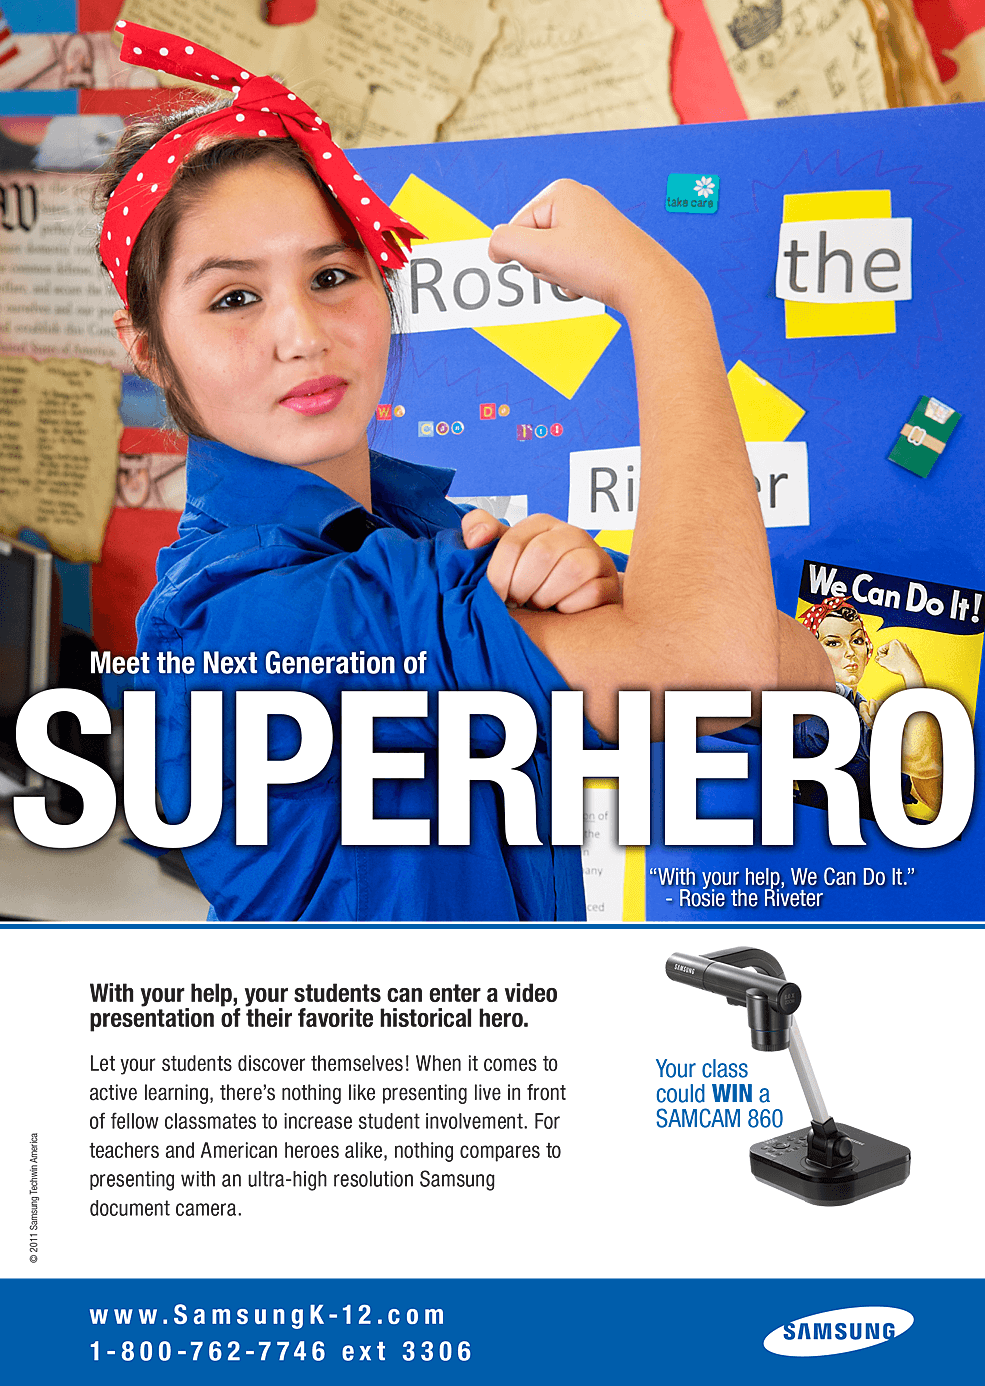 Samsung - Superhero - We Can Do It! - Integrated Marketing